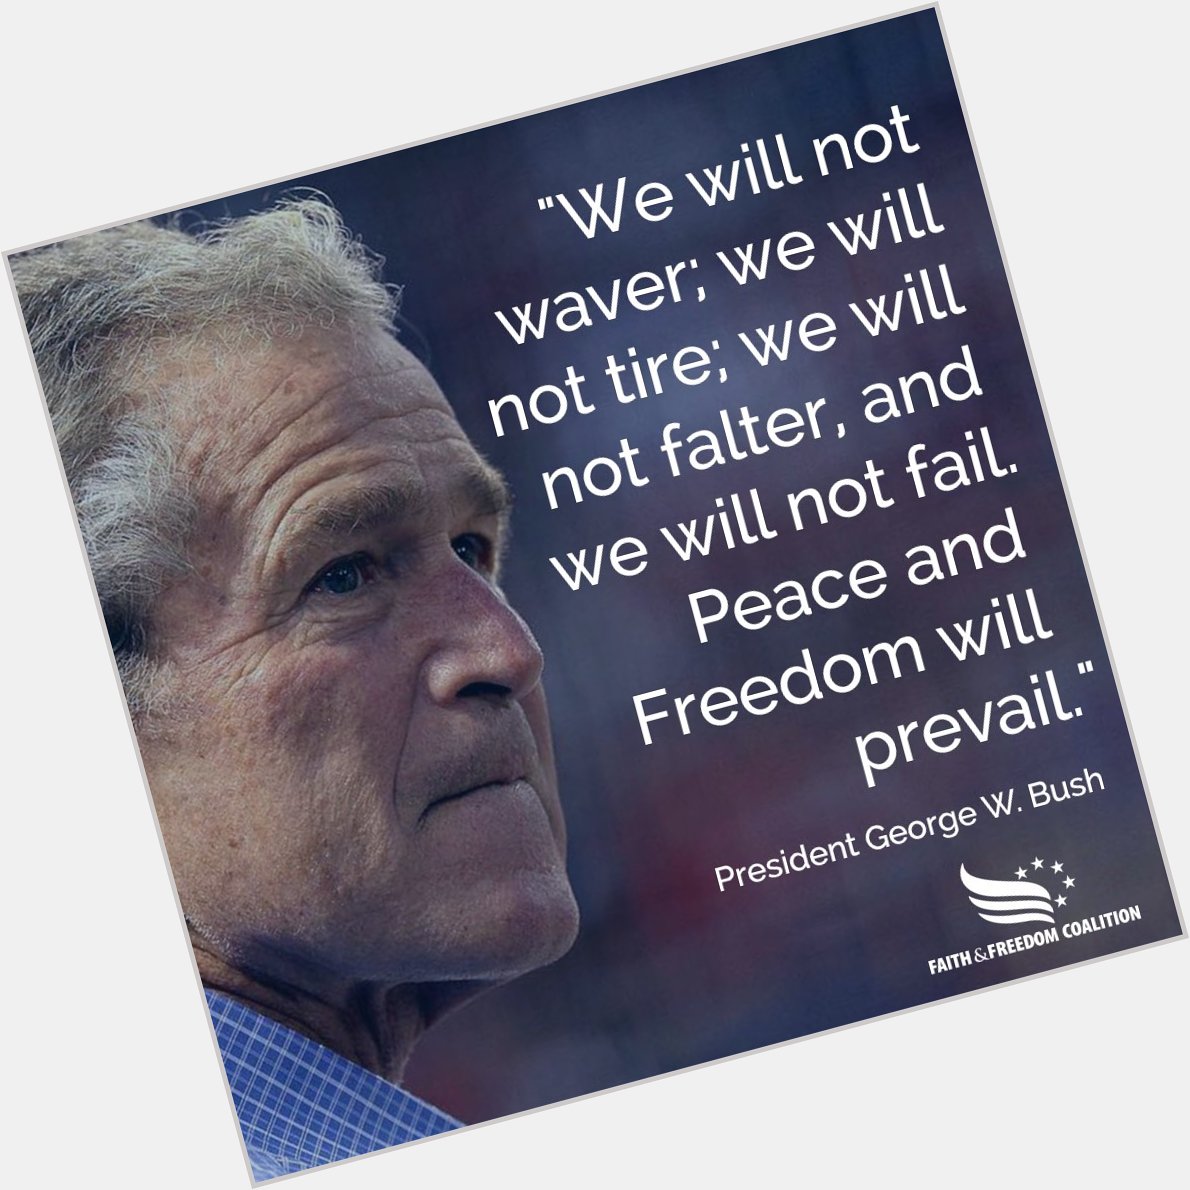 Happy birthday to former President George W. Bush! 